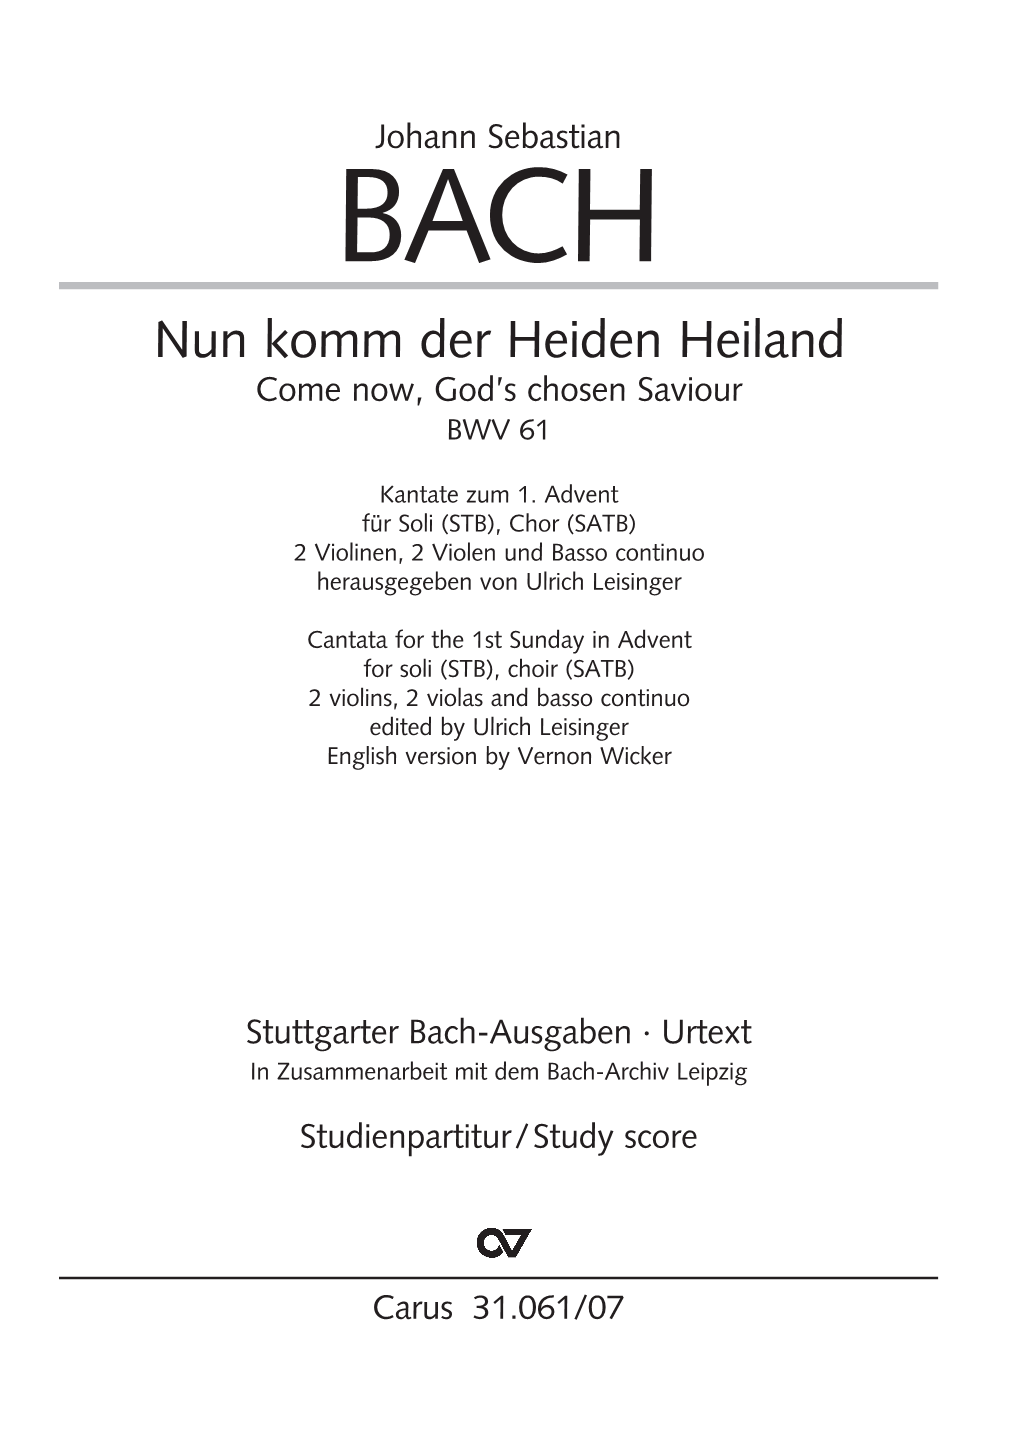 Nun Komm Der Heiden Heiland Come Now, God’S Chosen Saviour BWV 61